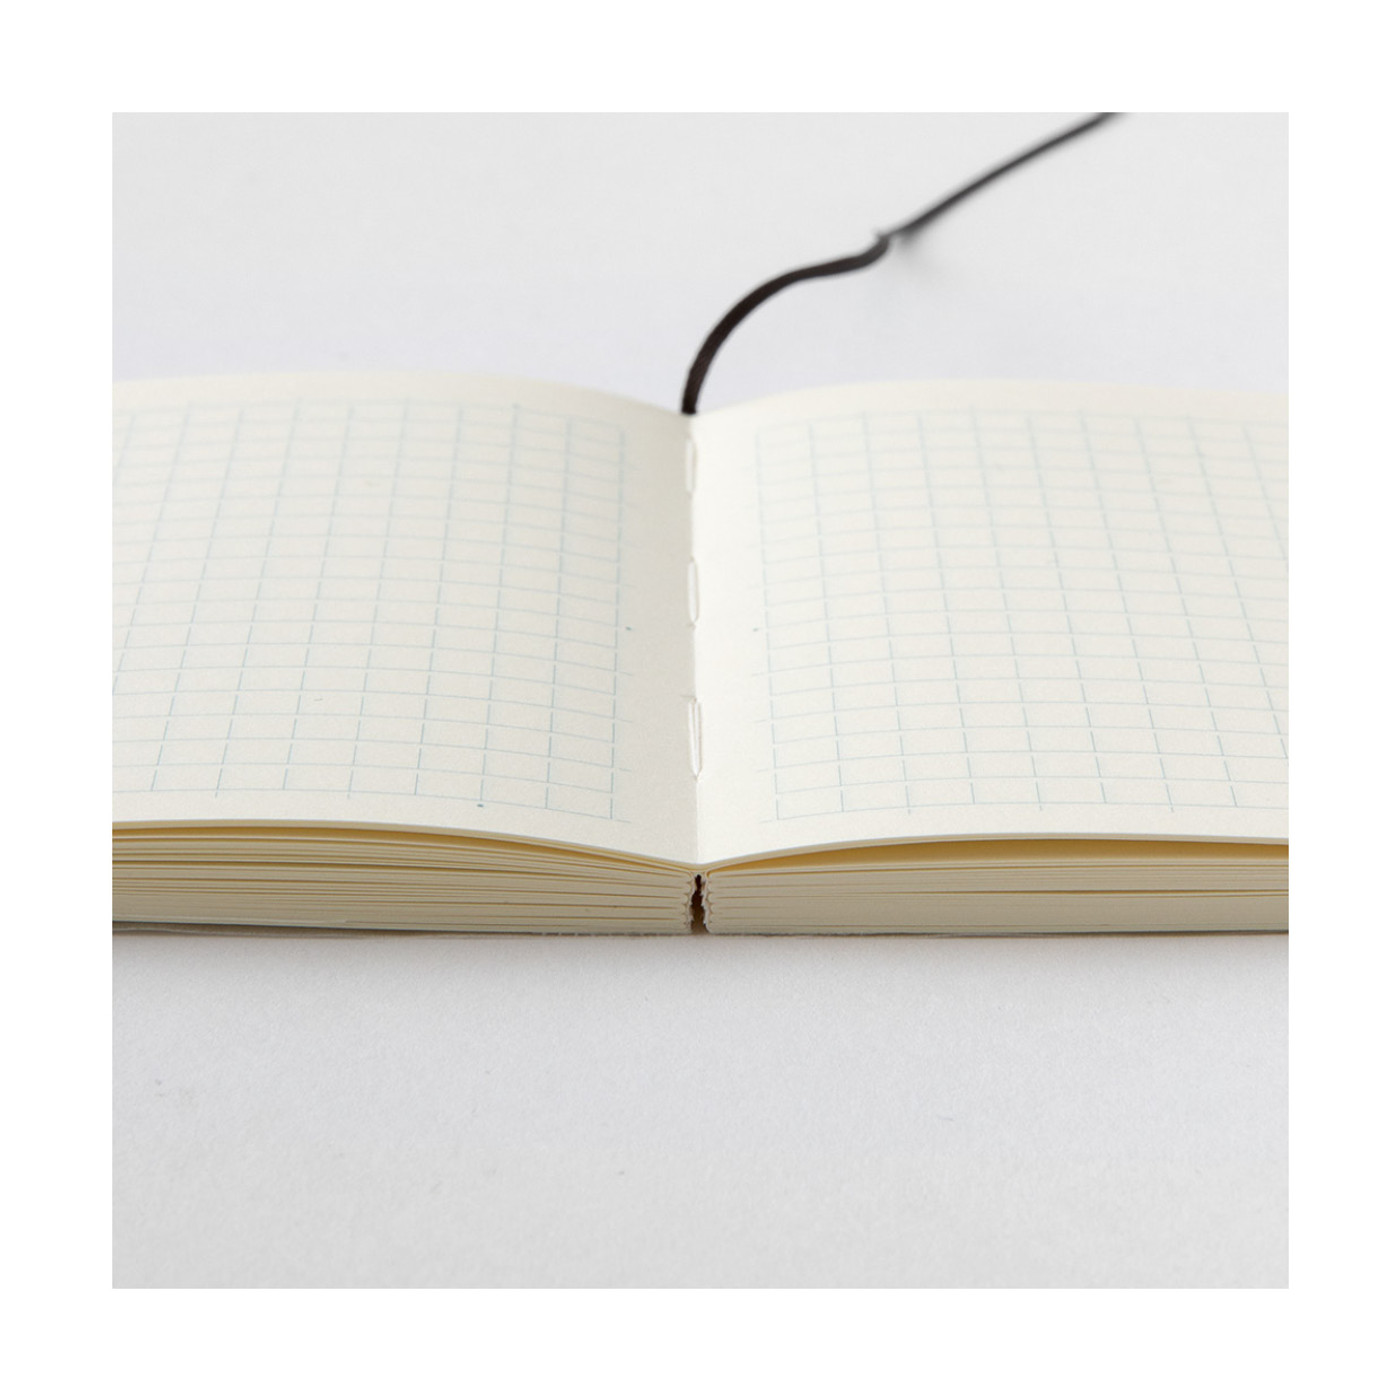 MD Paper notebook - A7 - SQUARED